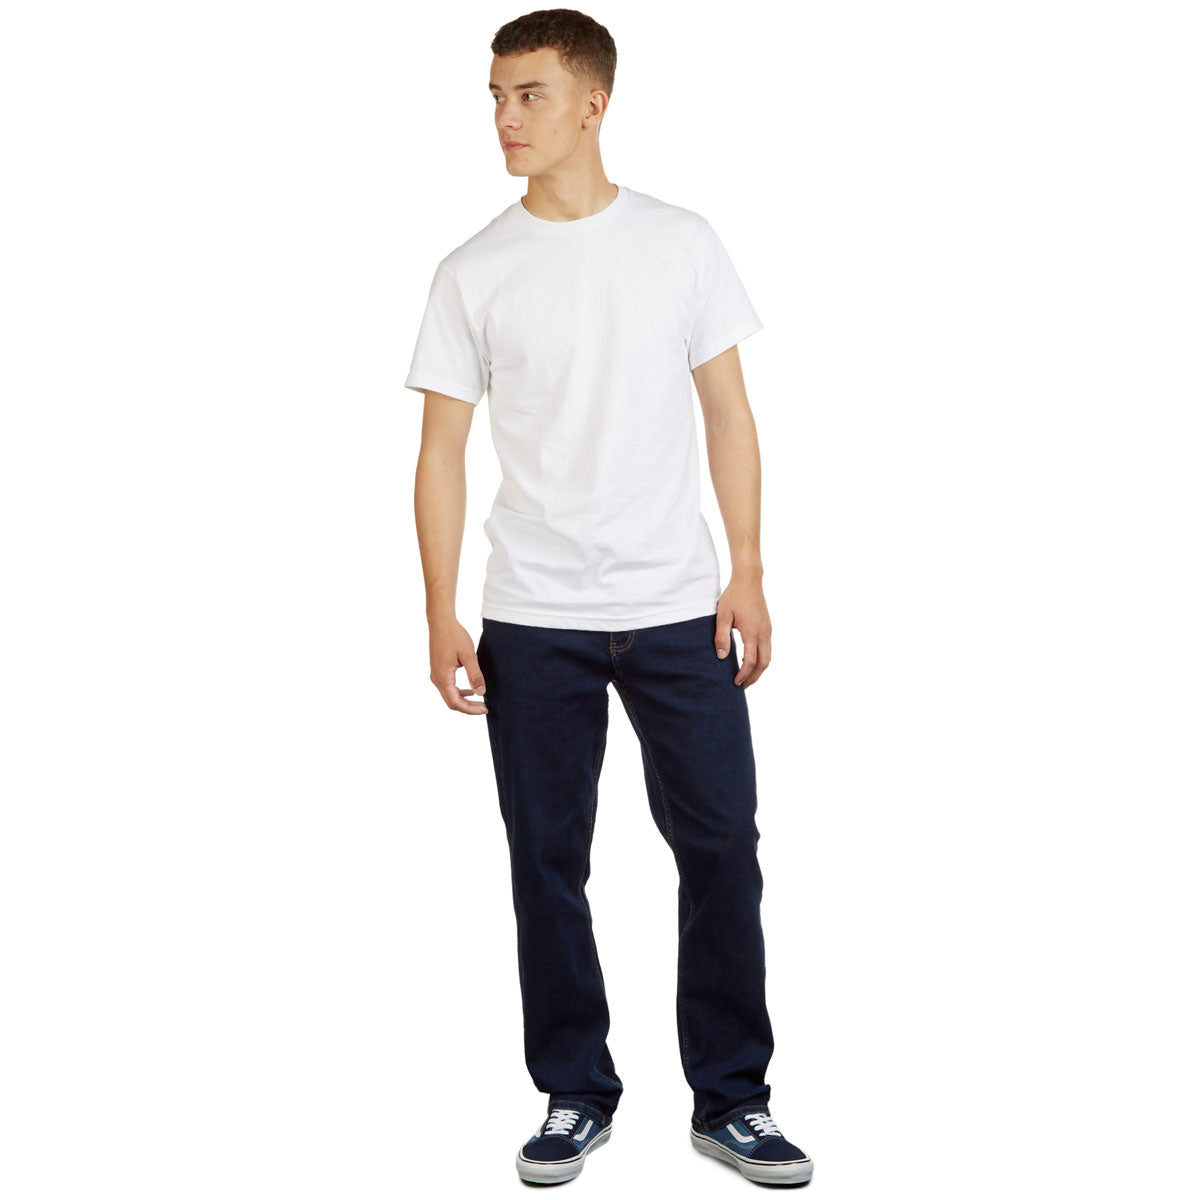 CCS Standard Plus Relaxed Denim Jeans - Indigo image 2